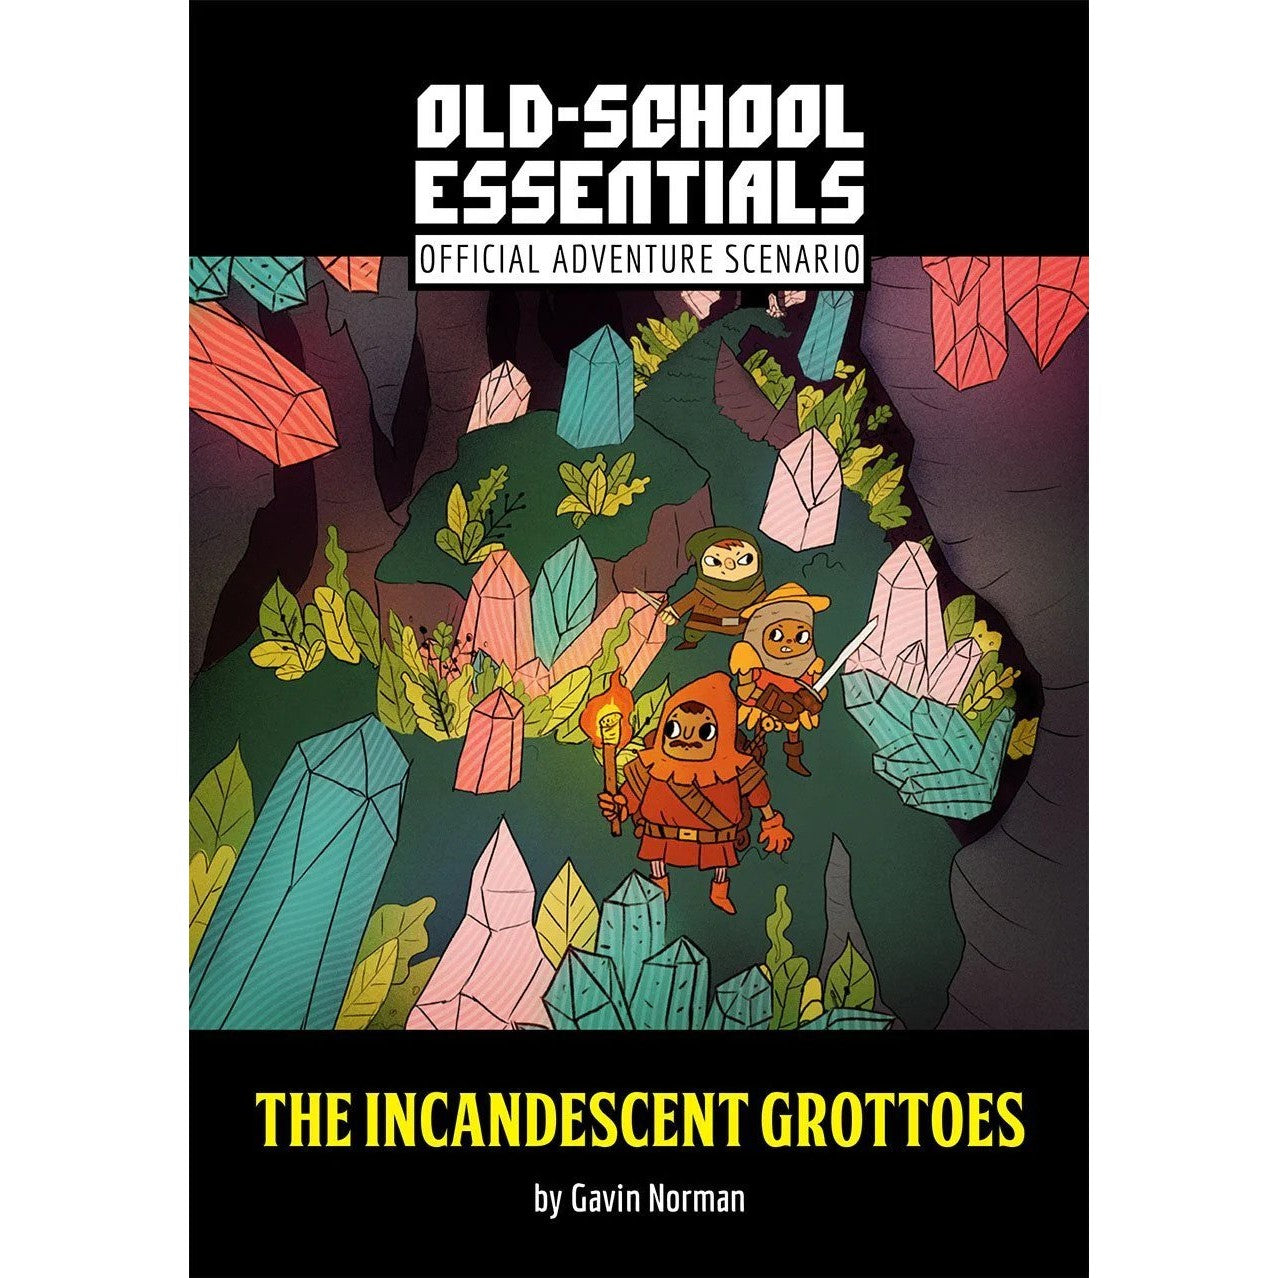 Old-School Essentials Official Adventure Scenario - The Incandescent Grottoes